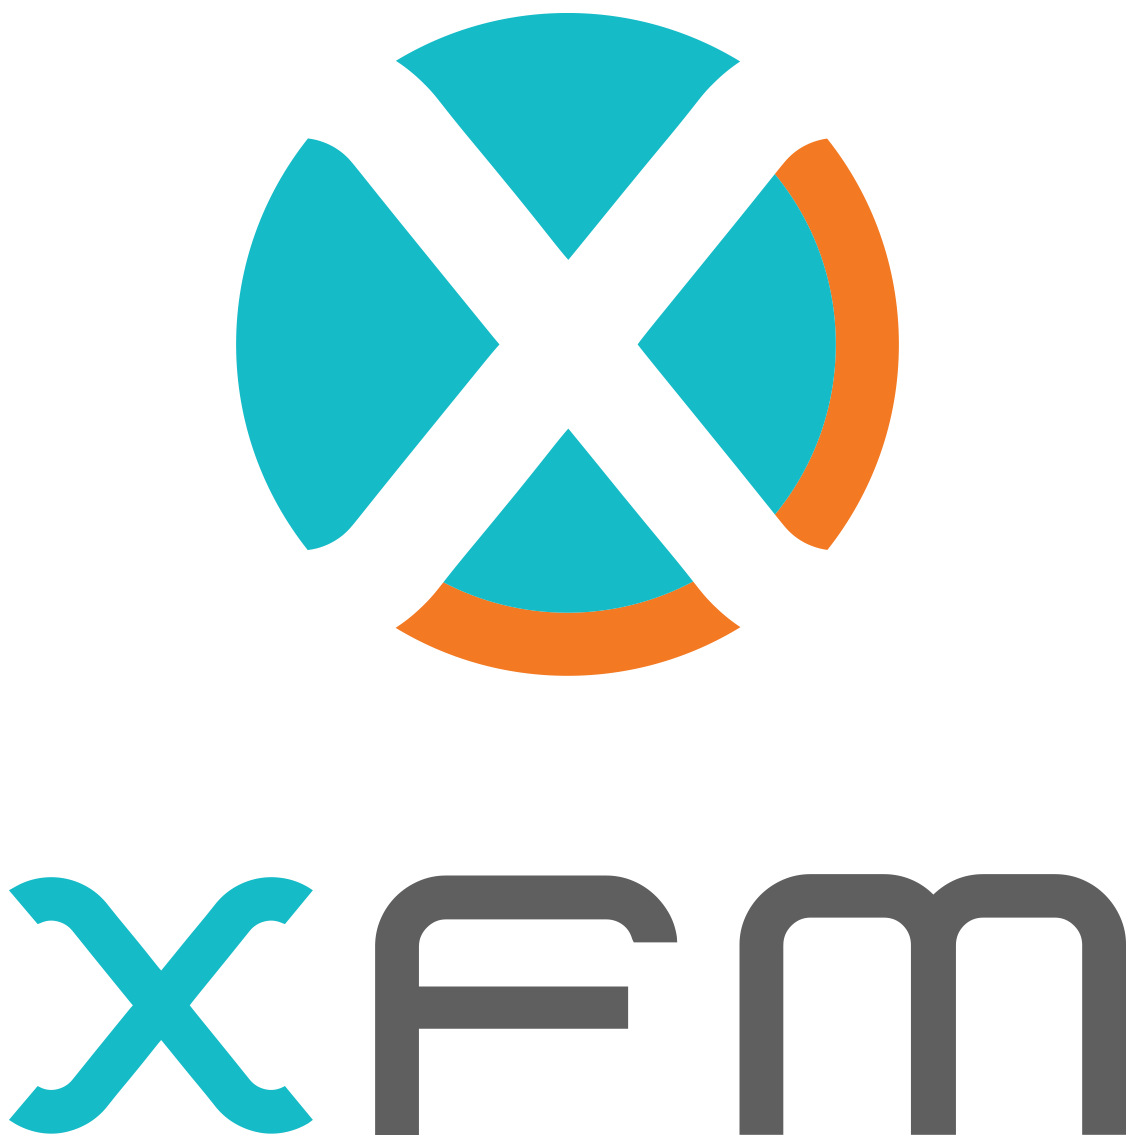 XFM 105.7 staion